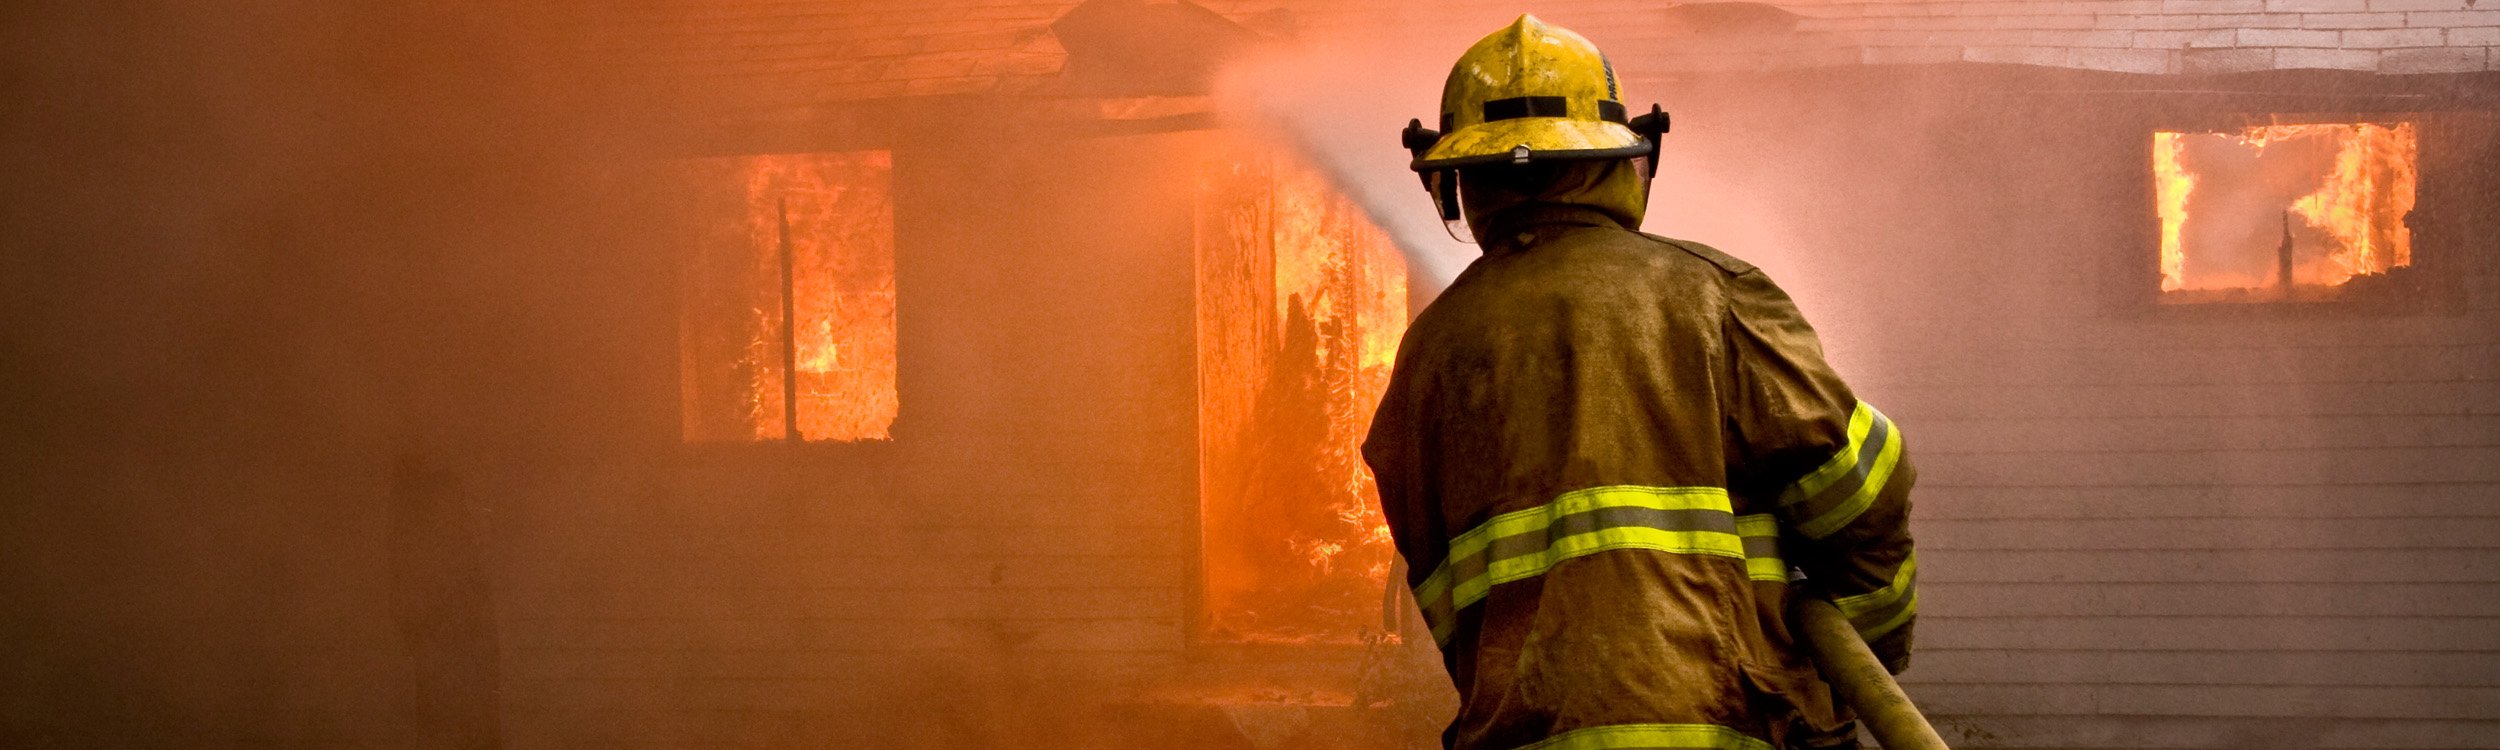 fireman hosing down a burning structure